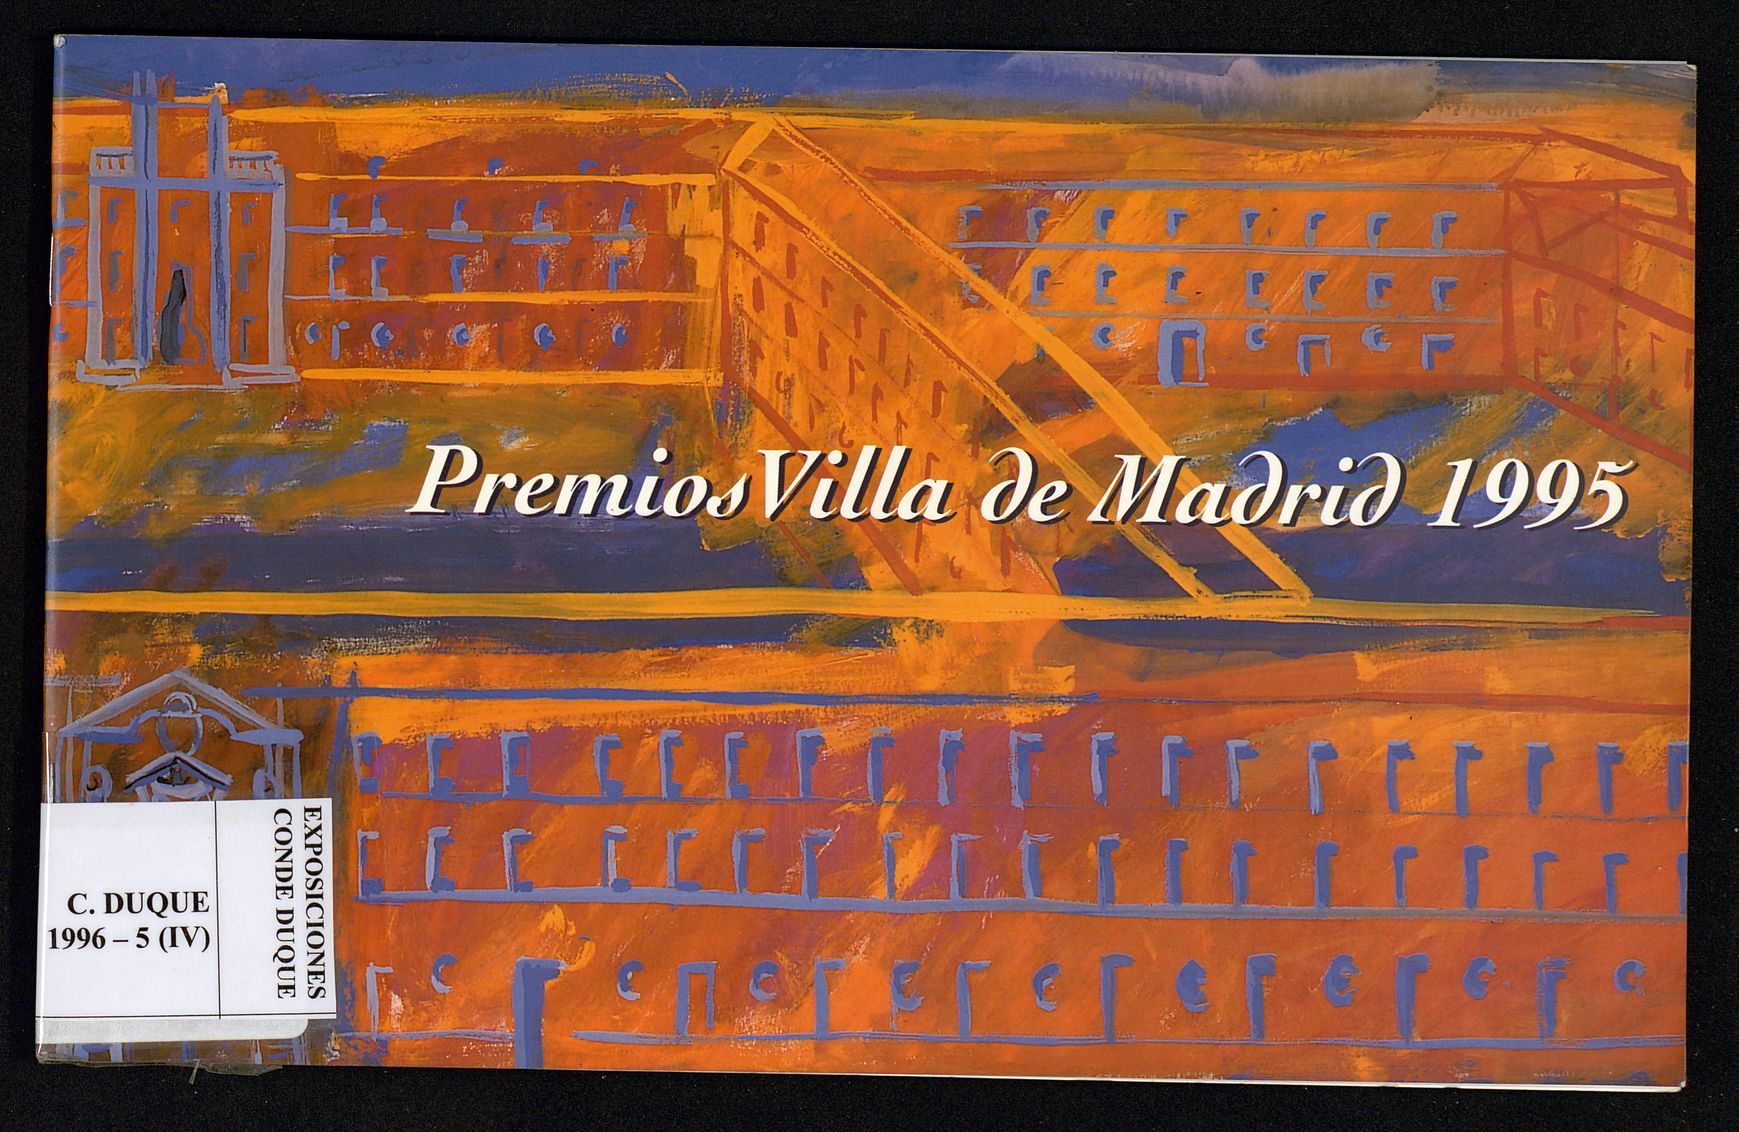 Premios Villa de Madrid 1995 : Francisco de Goya de Pintura, Mariano Benlliure de Escultura, Daniel Zuloaga de Cerámica, Kaulak de Fotografía